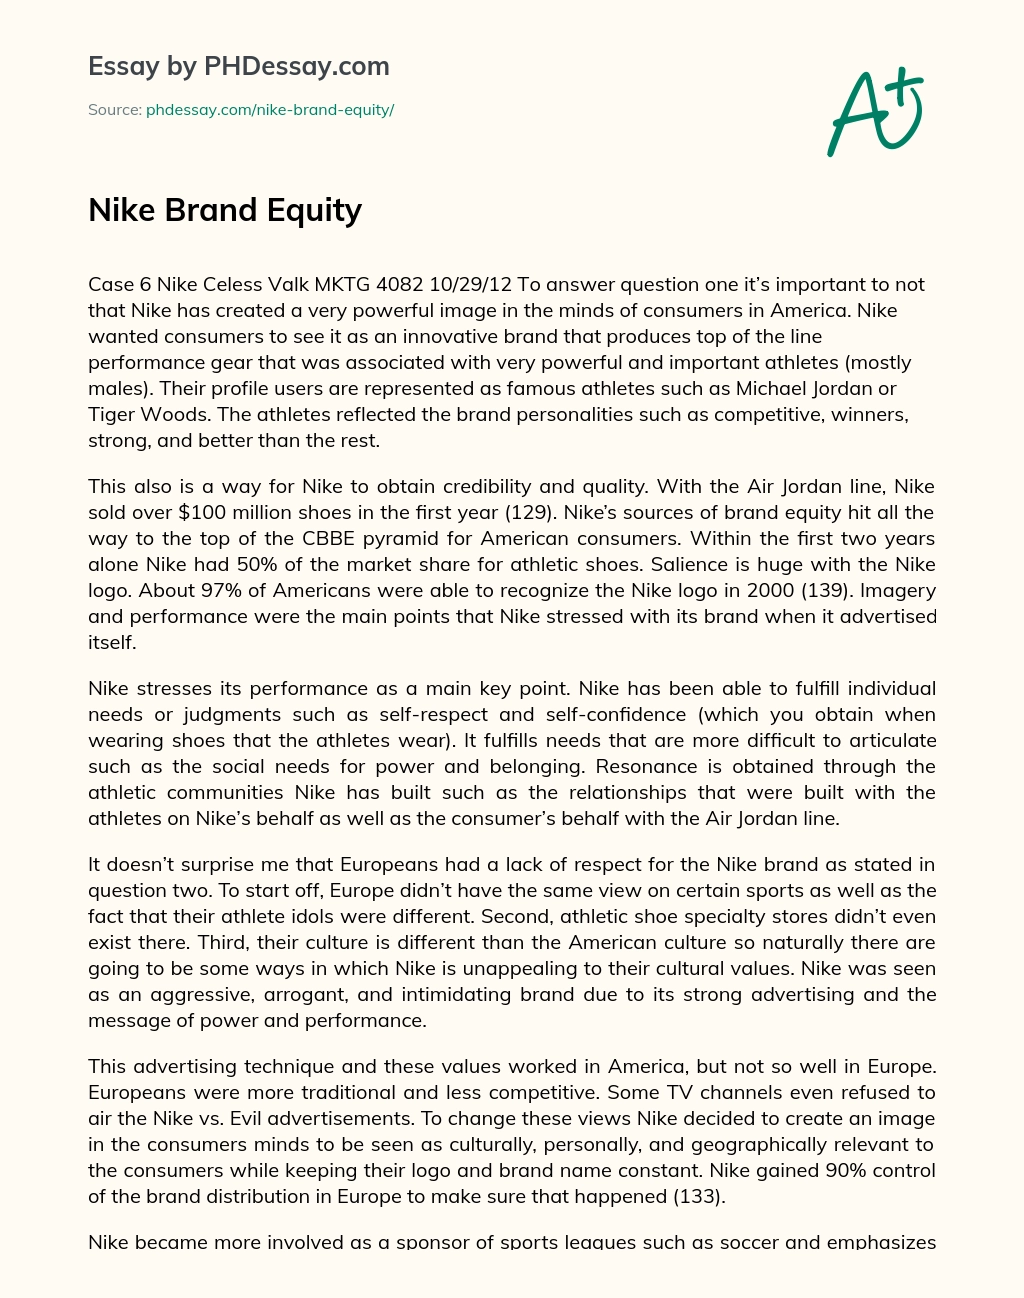 Nike Brand Equity essay